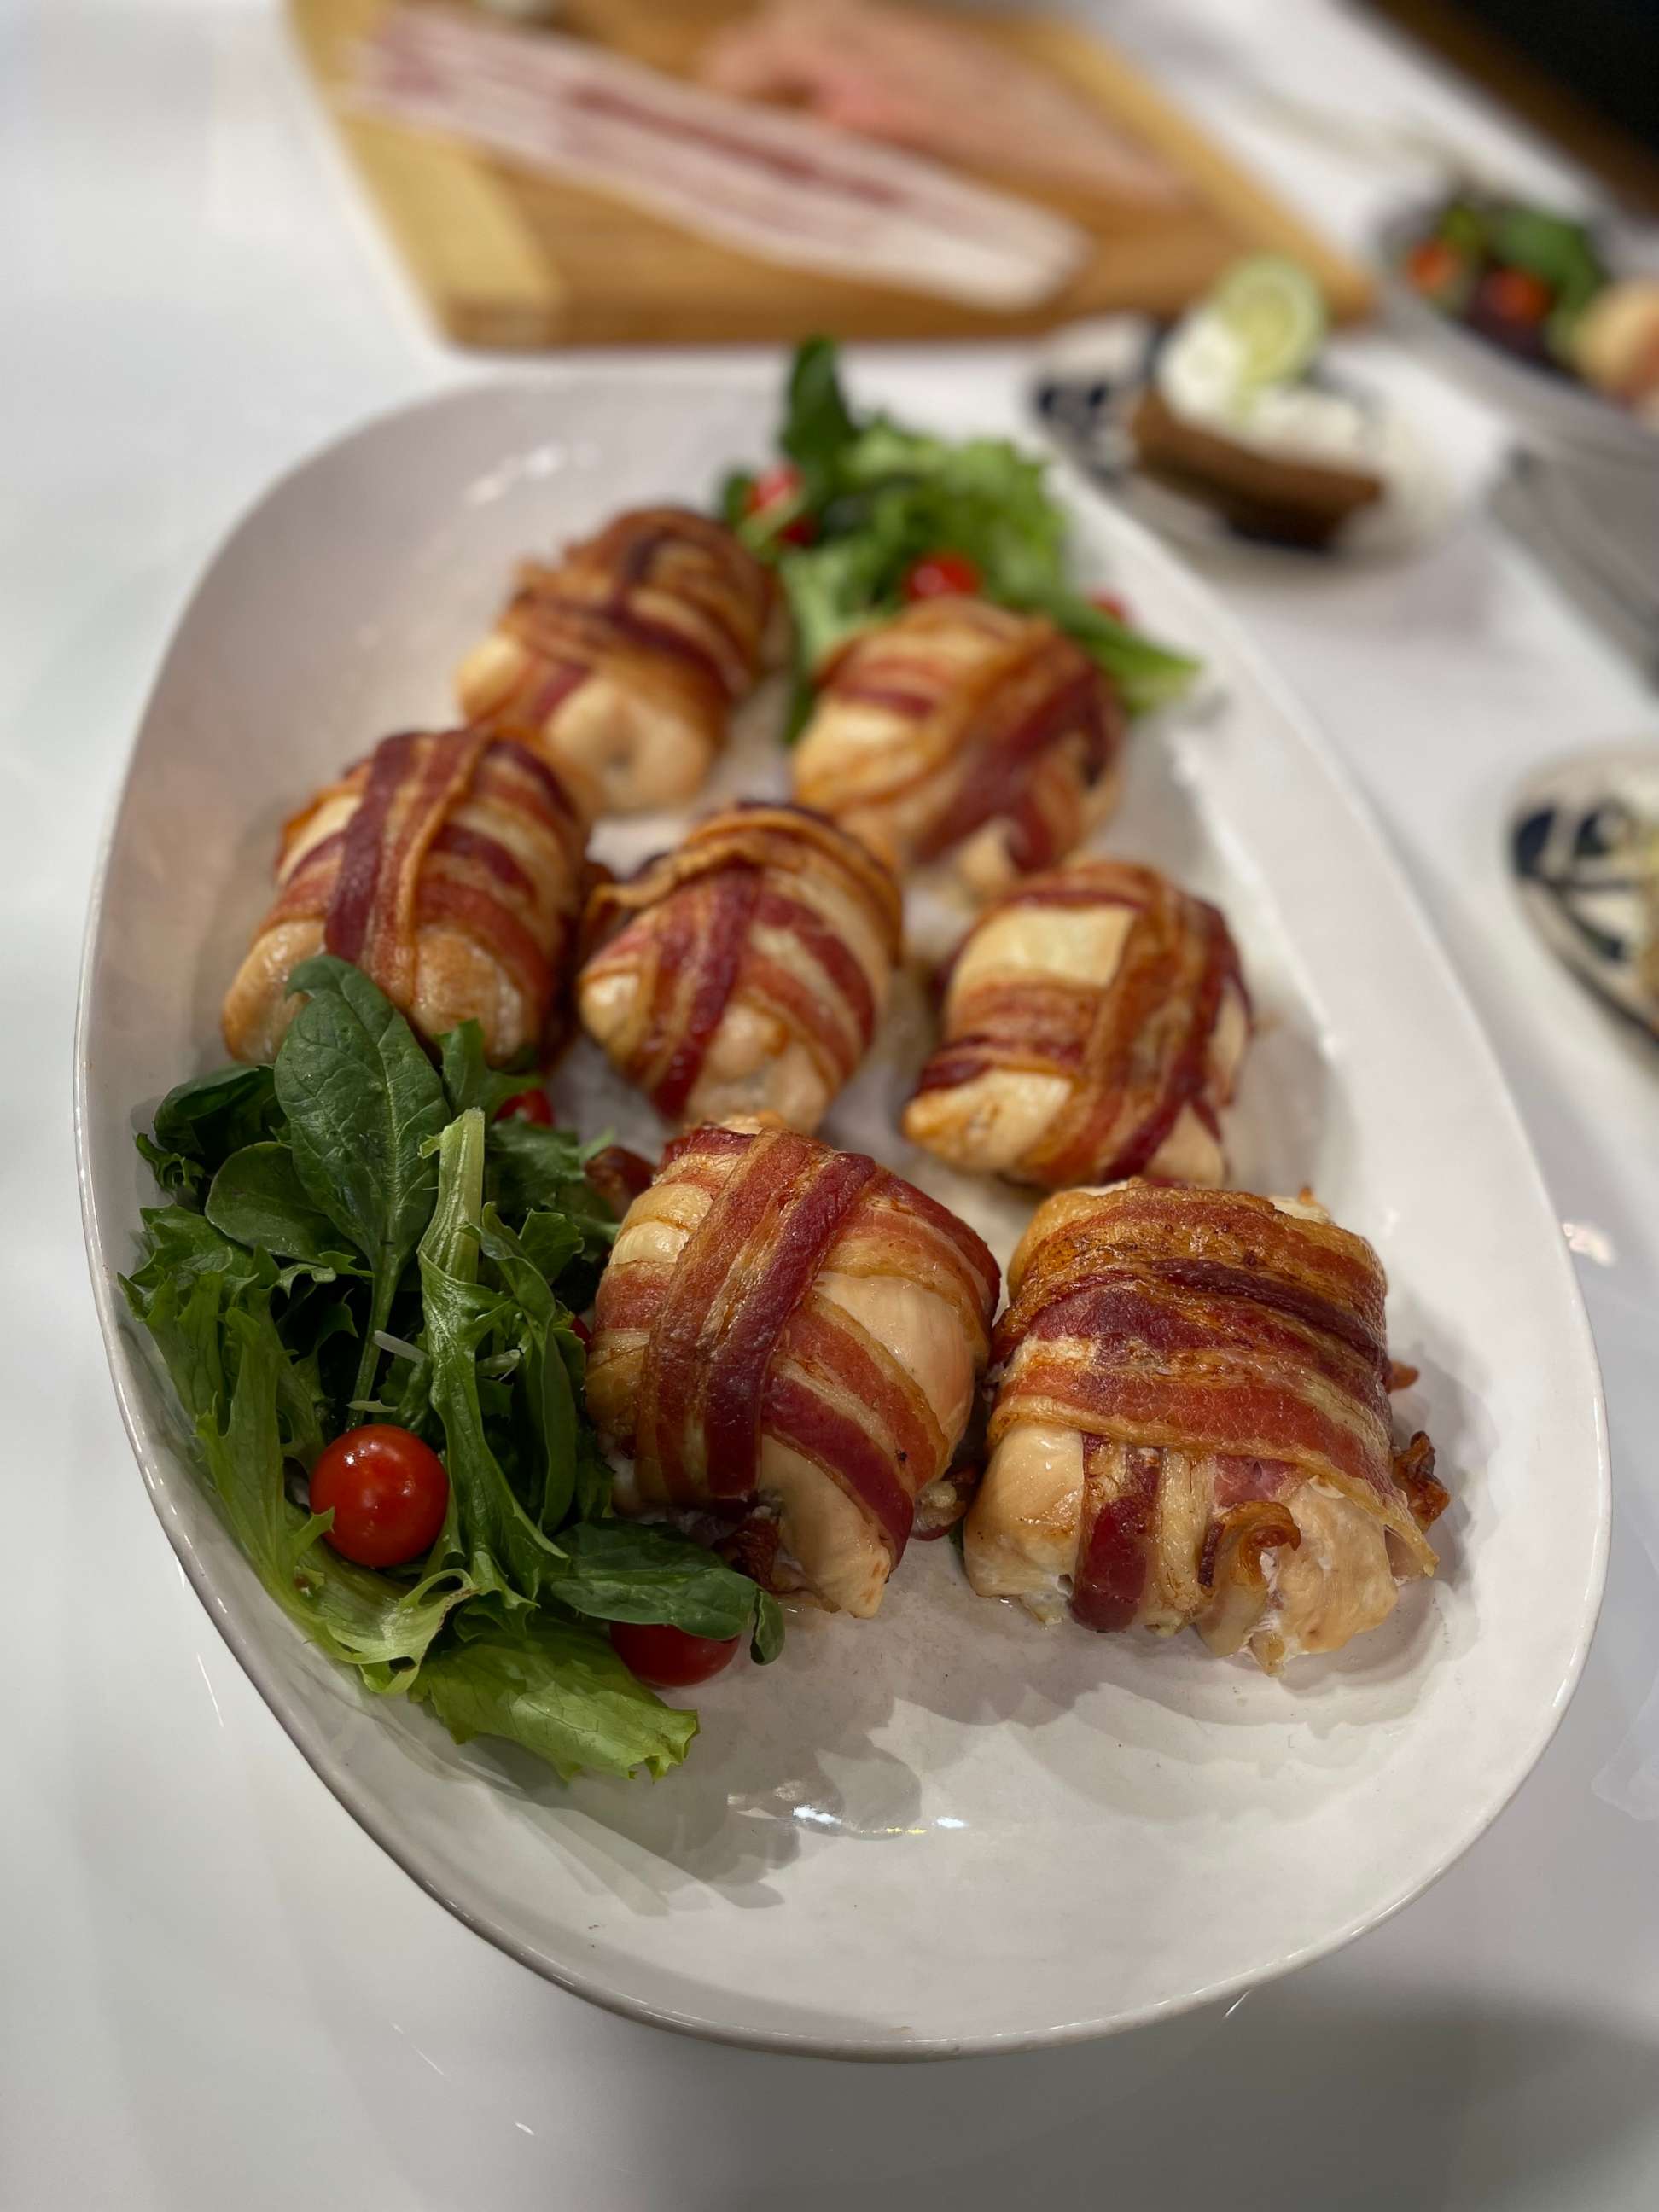 PHOTO: cheese-stuffed chicken bacon wraps